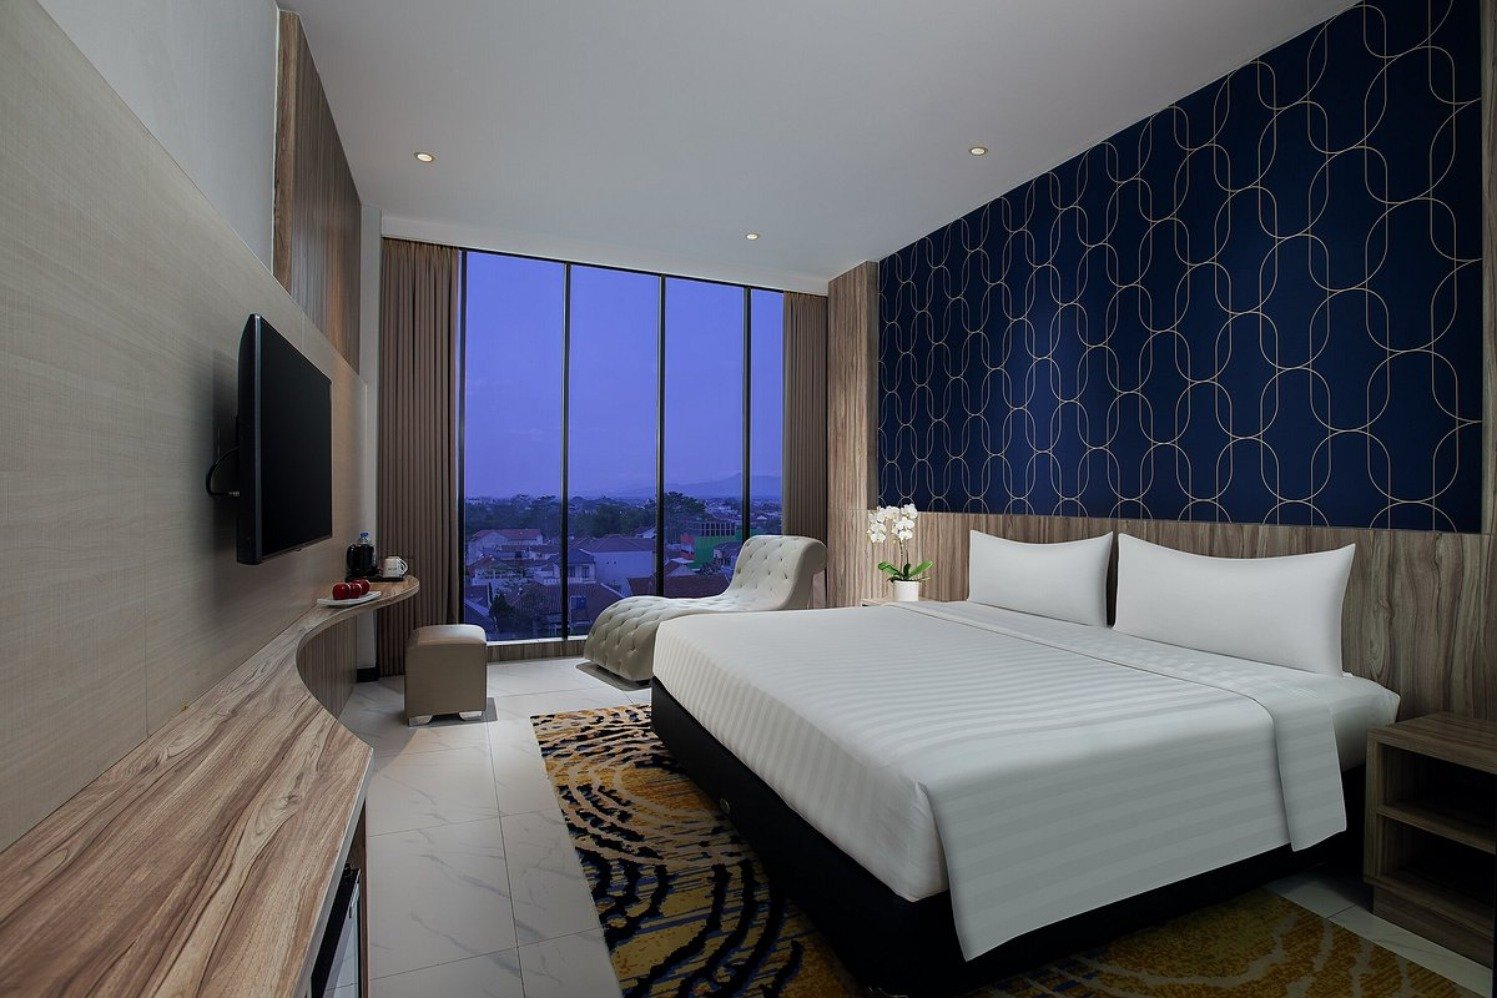 Tipe kamar Deluxe di ASTON Inn Tasikmalaya. (Sumber gambar: Archipelago International)